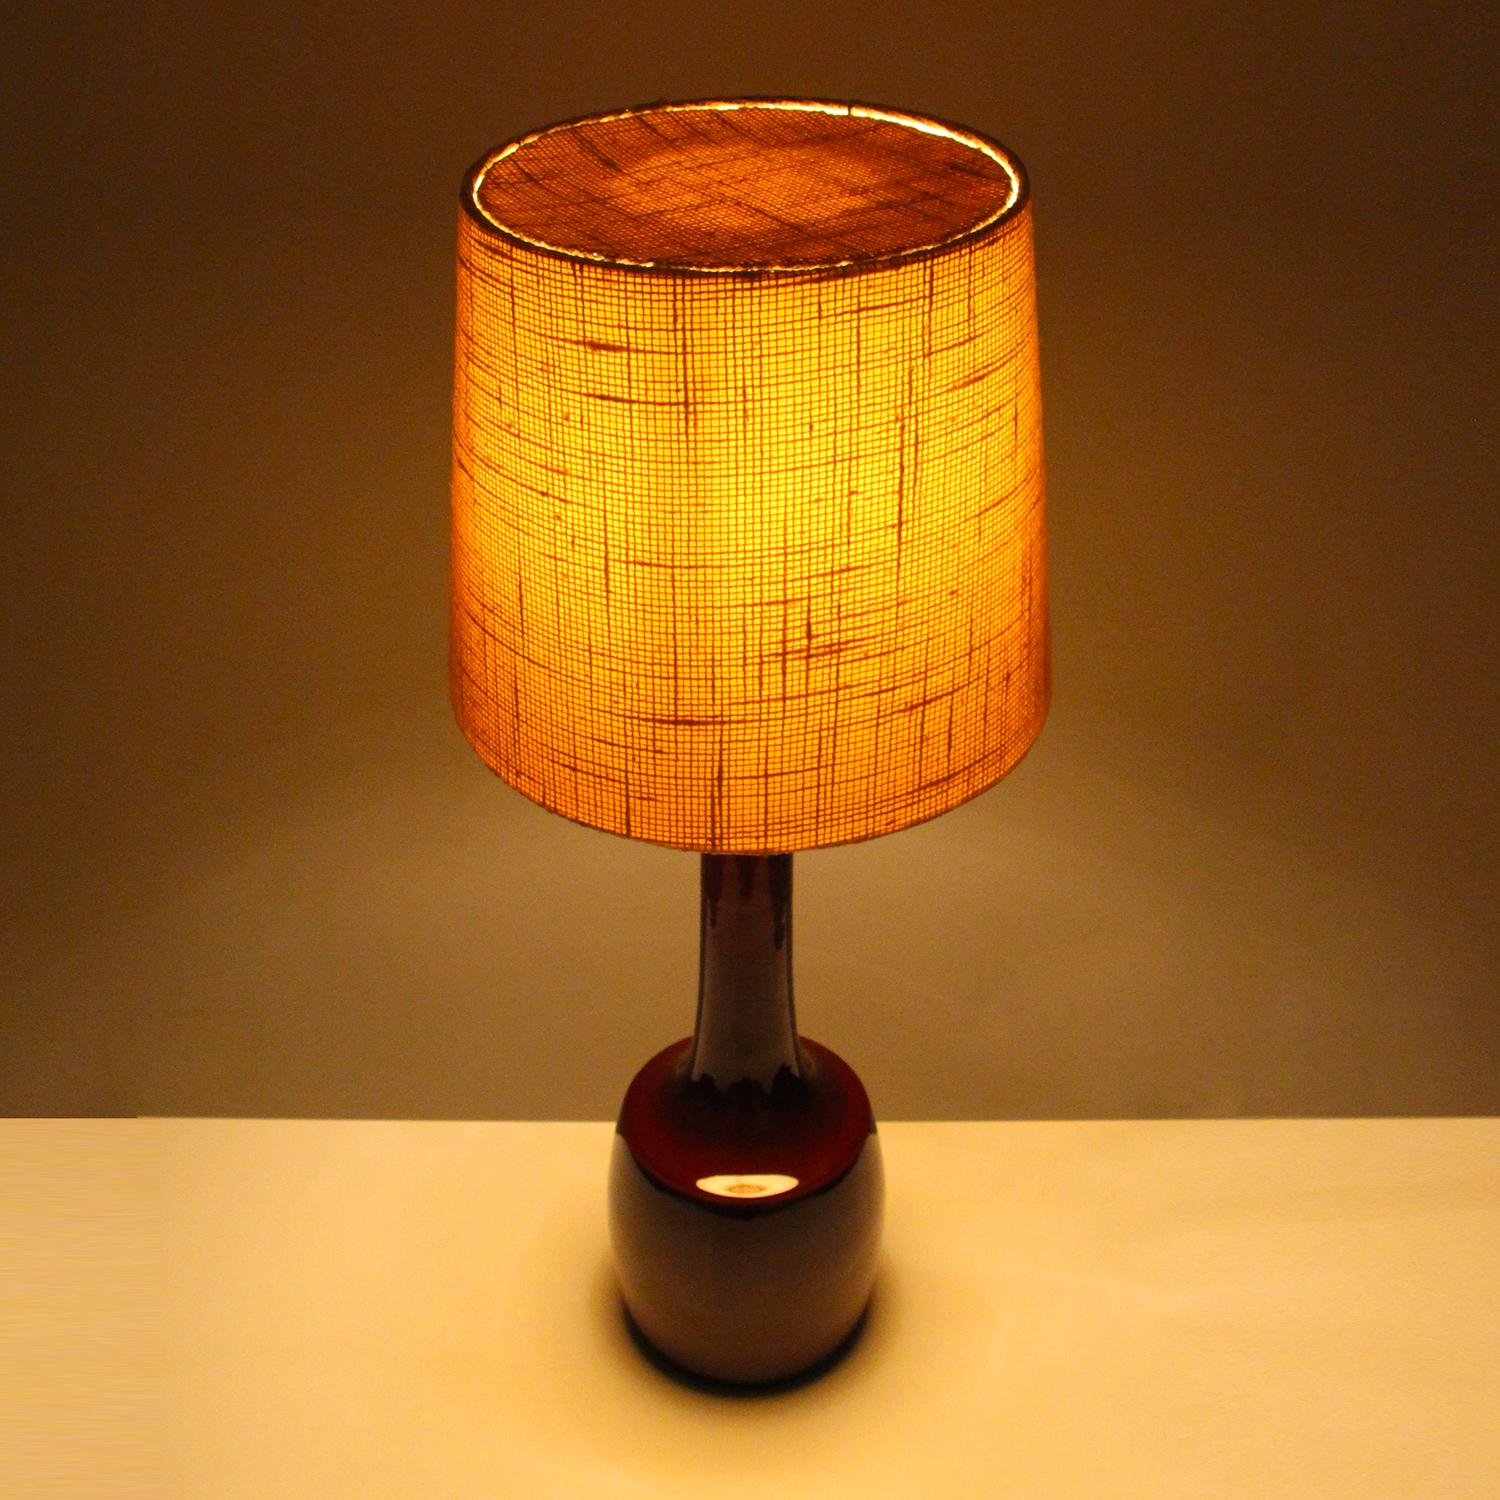 Danish Tall Table Light by Knabstrup Keramik 1960s, Burgundy Ceramic Lamp with Shade